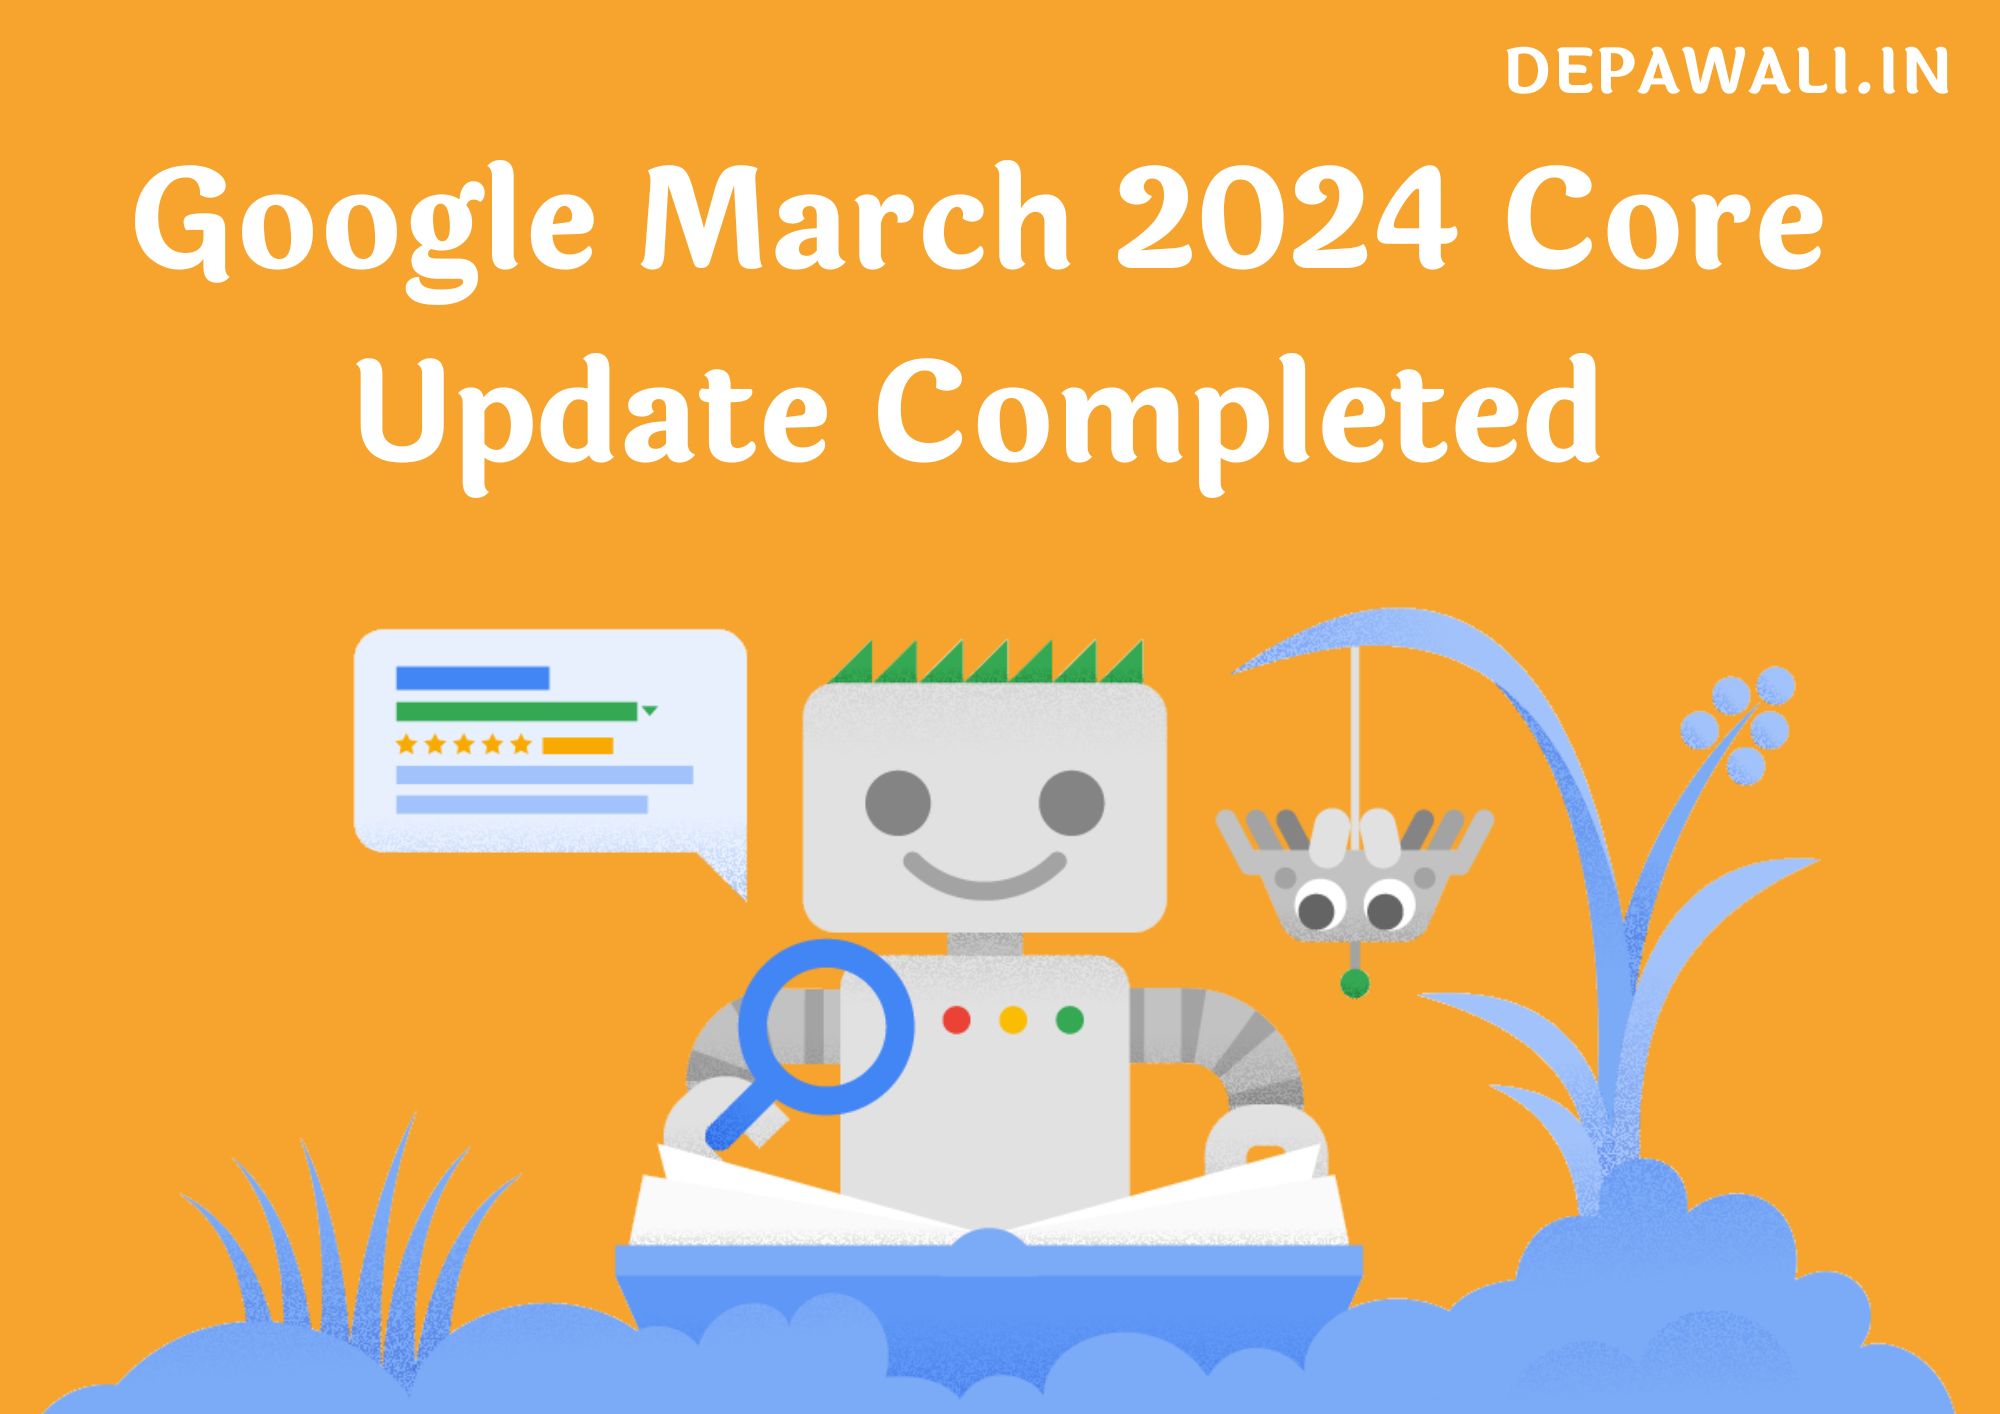 Google March 2024 Core Update Completed - गूगल मार्च 2024 कोर अपडेट हुआ खत्म